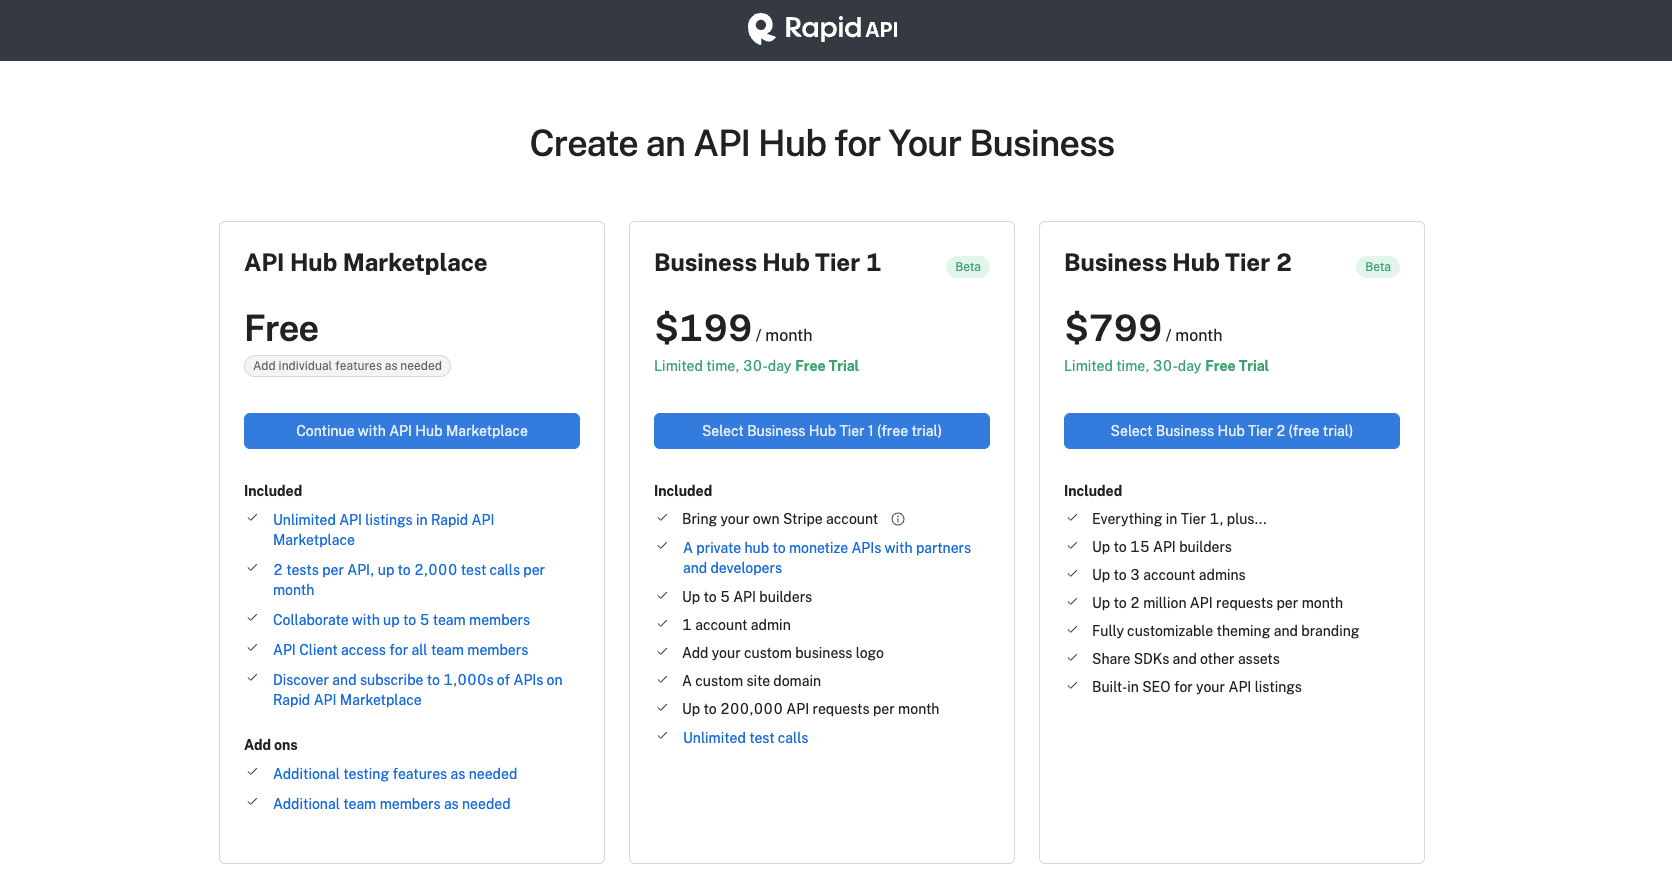 Pricing tiers of Rapid's API Hub